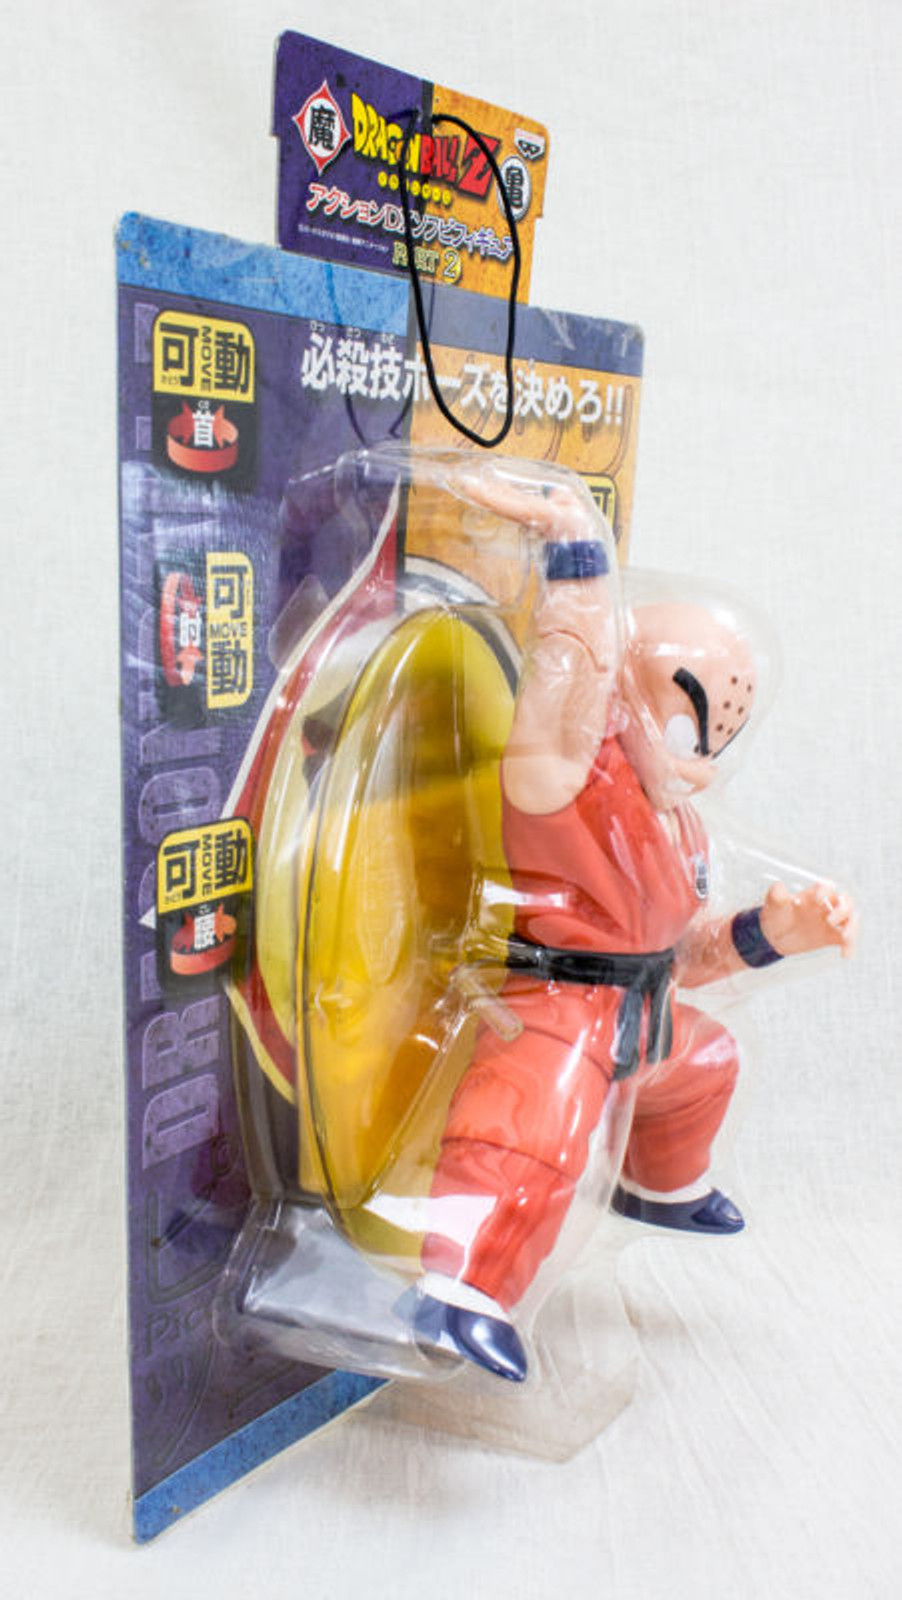 Dragon Ball Z Krillin Action DX Sofubi Figure 2 Banpresto JAPAN ANIME MANGA